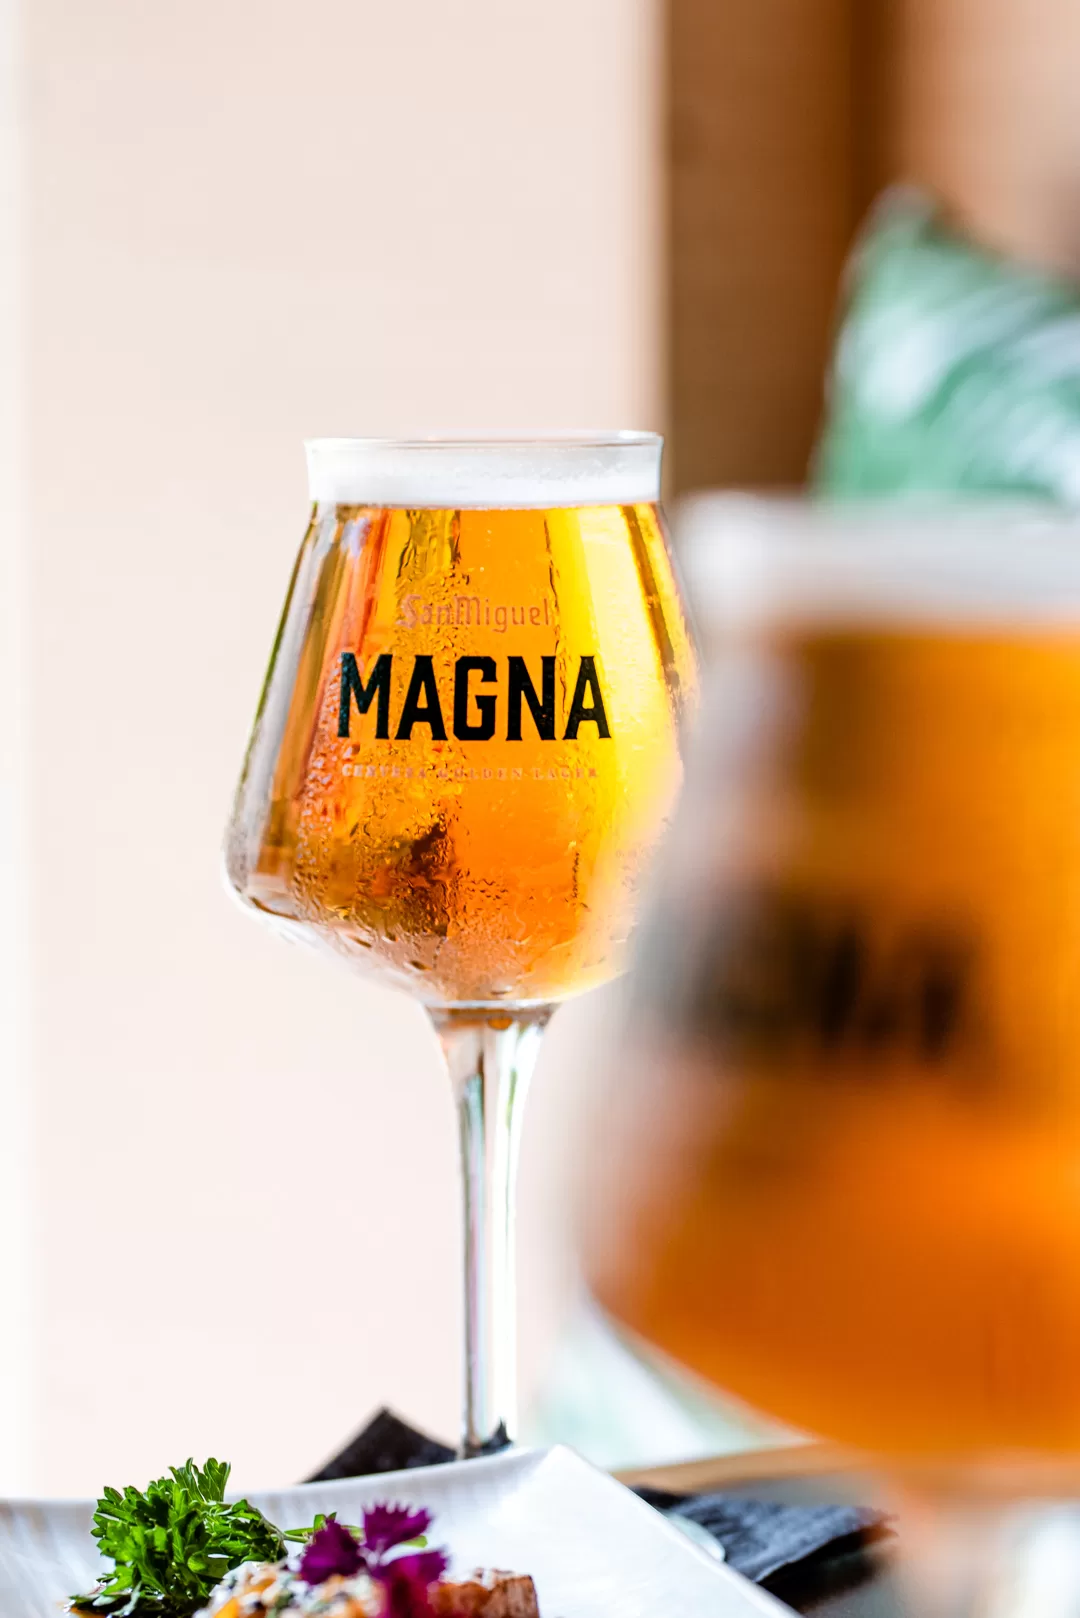 Barcelona restaurant photography of San Miguel Magna beer